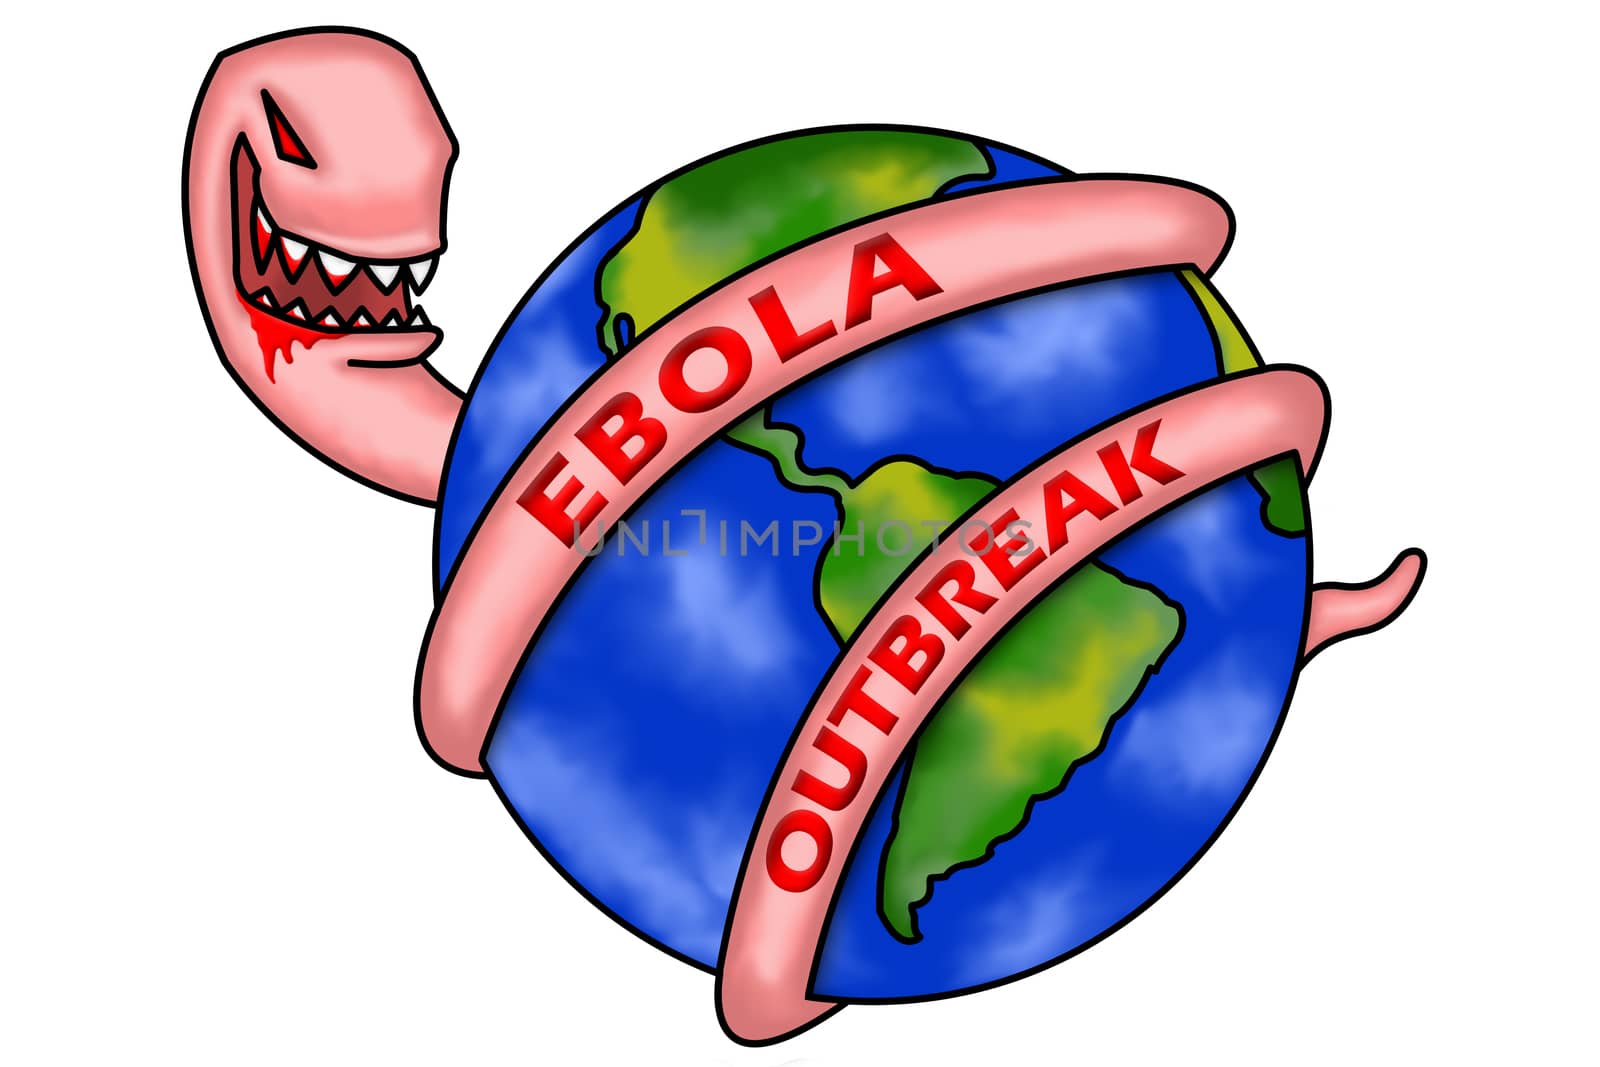 Ebola Outbreak by Nonneljohn